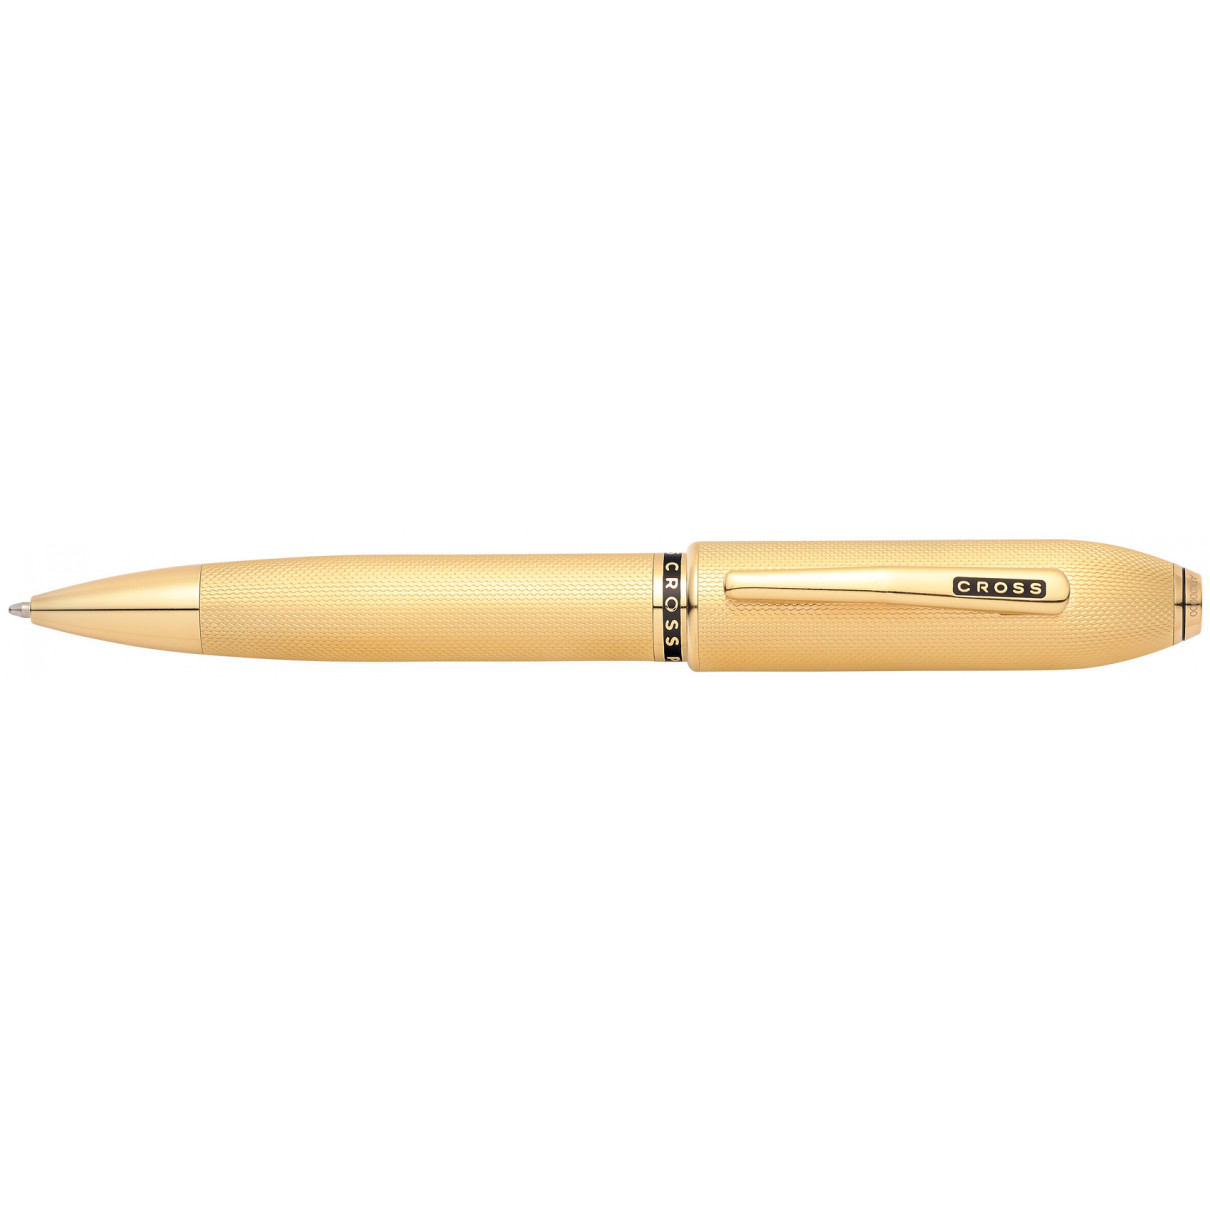 Cross Peerless 125 Ballpoint Pen - 23K Heavy Gold Plated